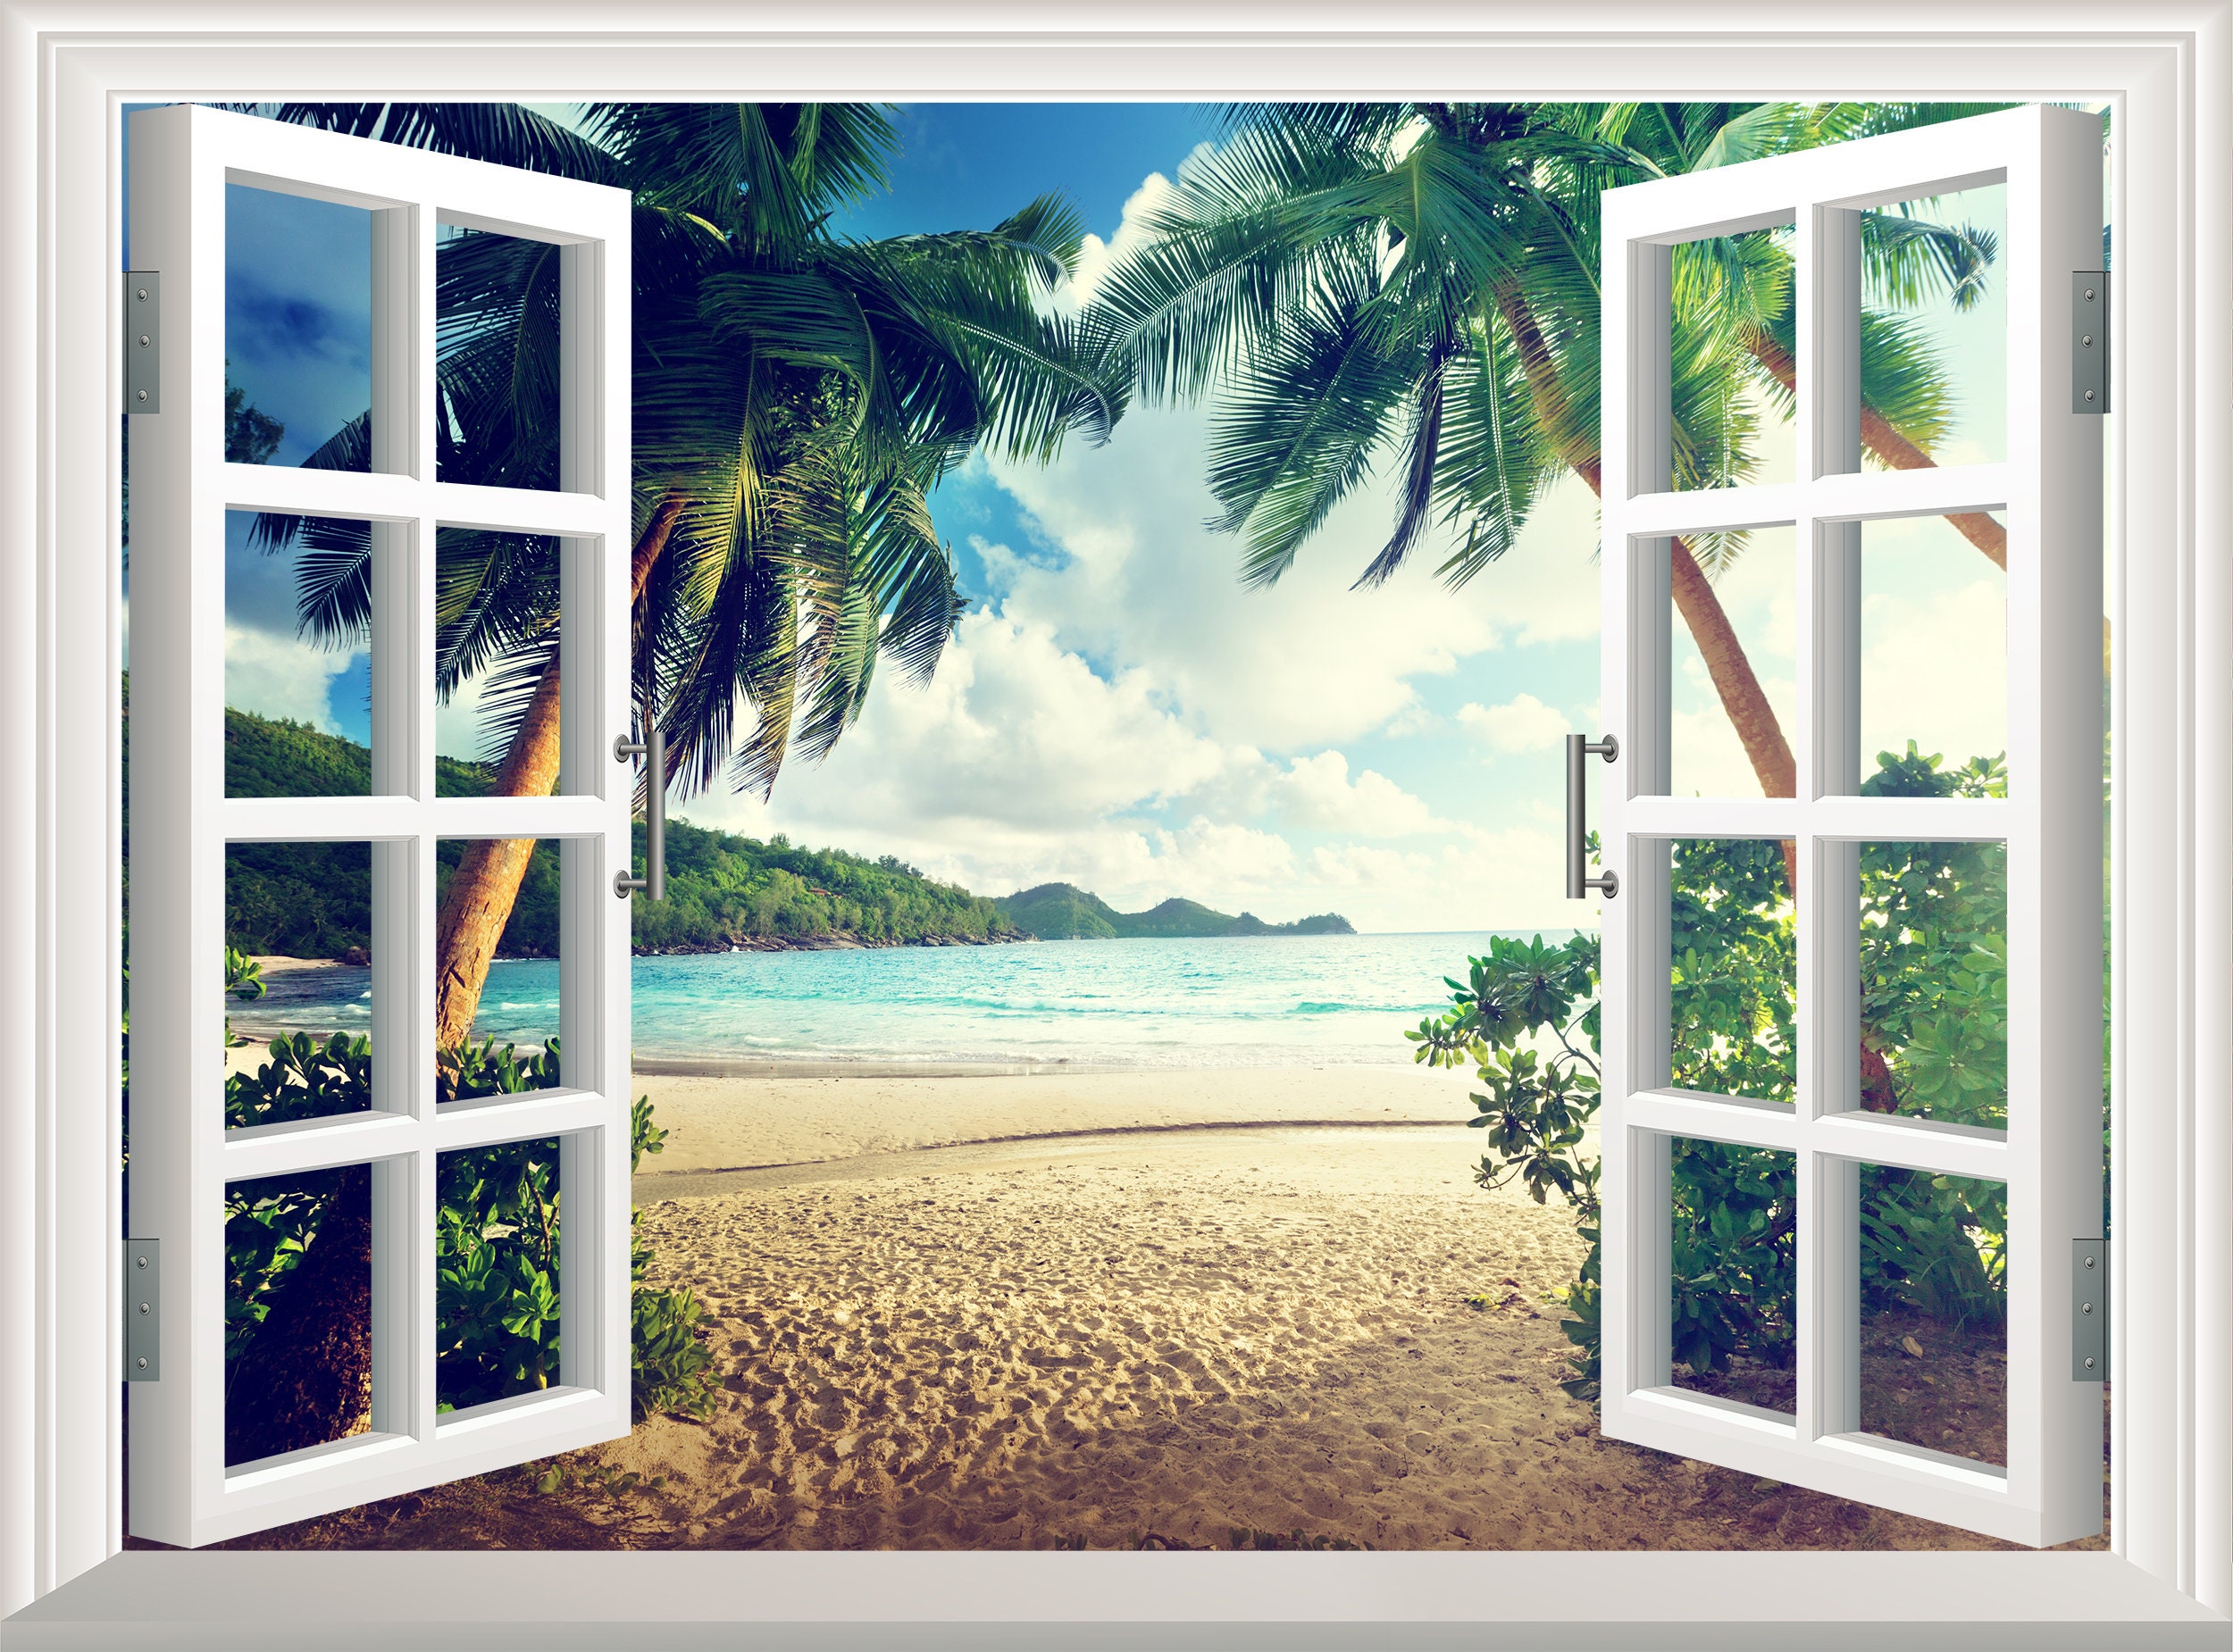 Seychelles Beach Palms Shore 3D Full Wall Mural Photo Wallpaper Print Home Decal 